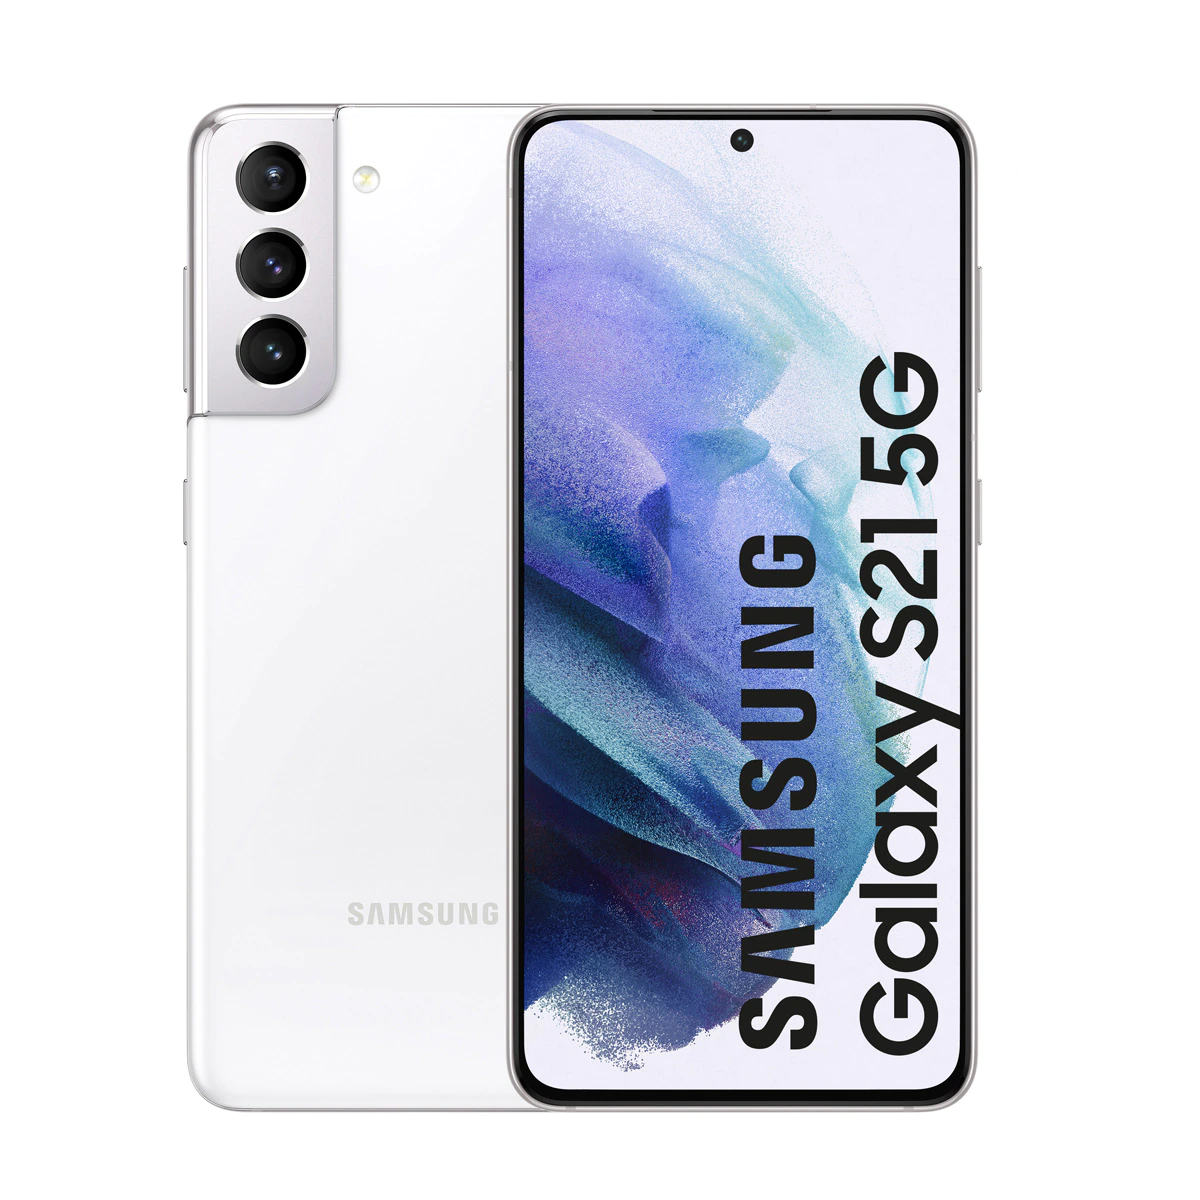 Samsung Galaxy S21 5G 8 GB + 256 GB blanco móvil libre